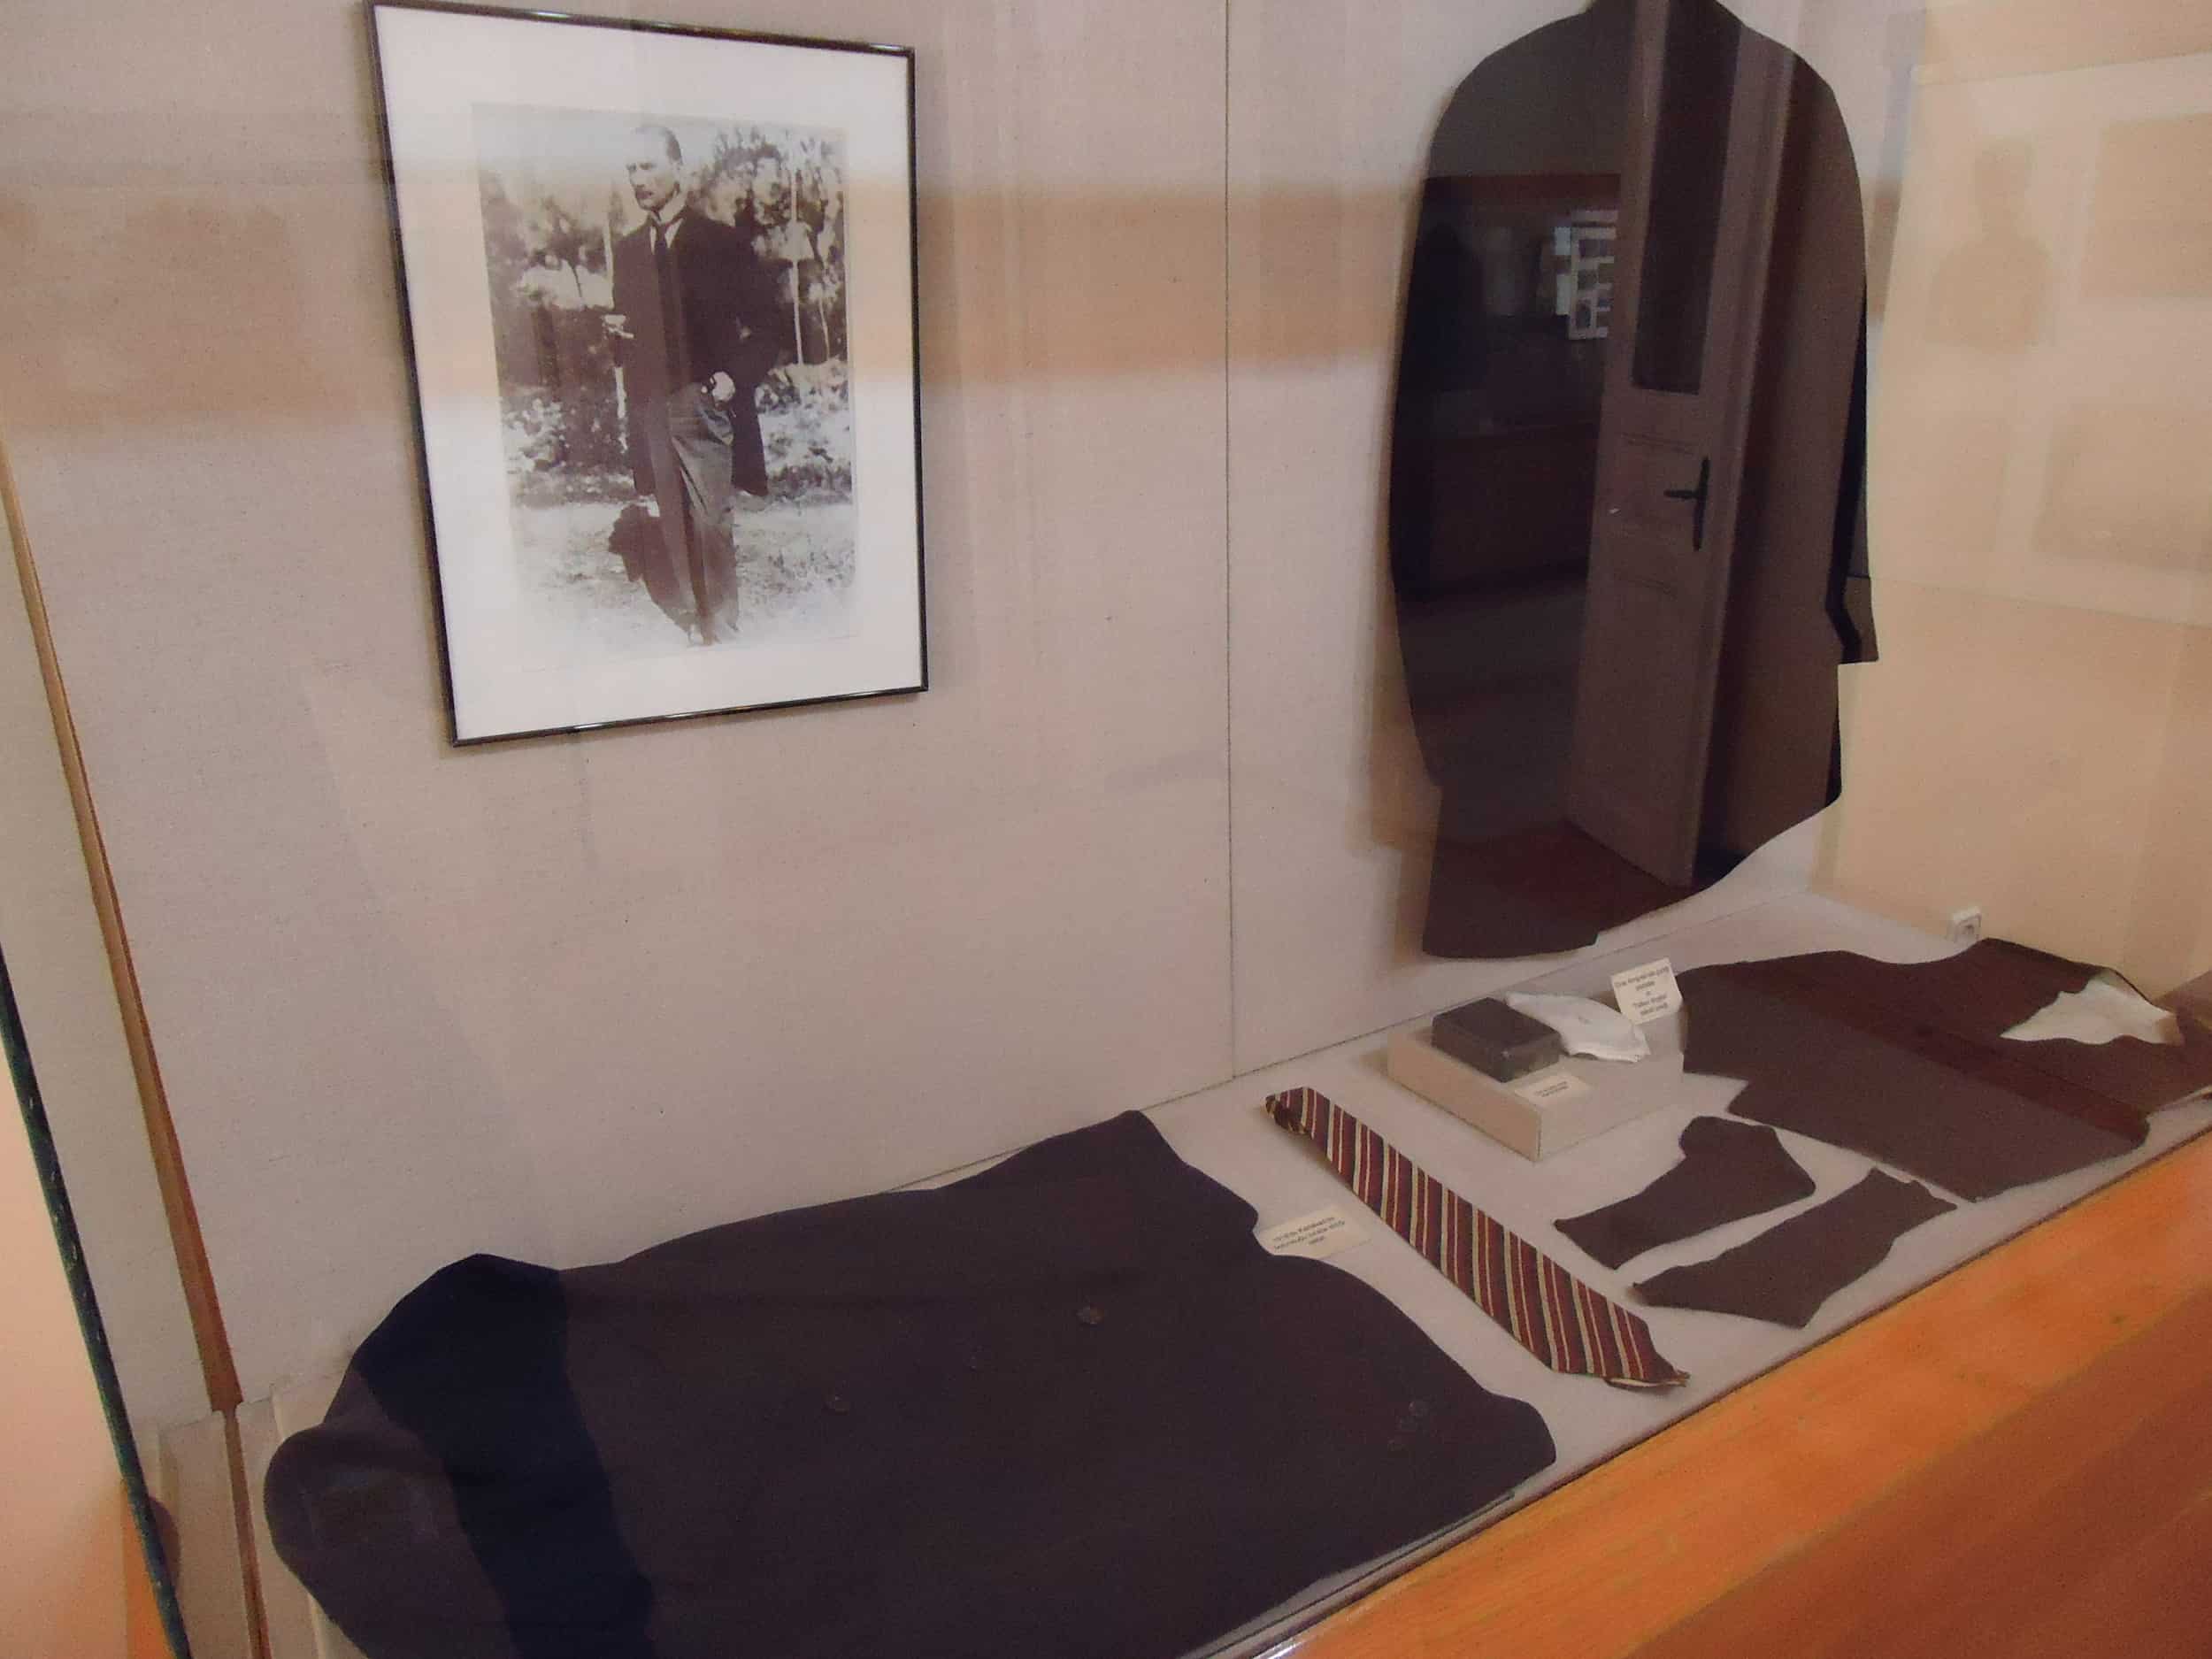 Clothing worn by Atatürk at the Atatürk Museum